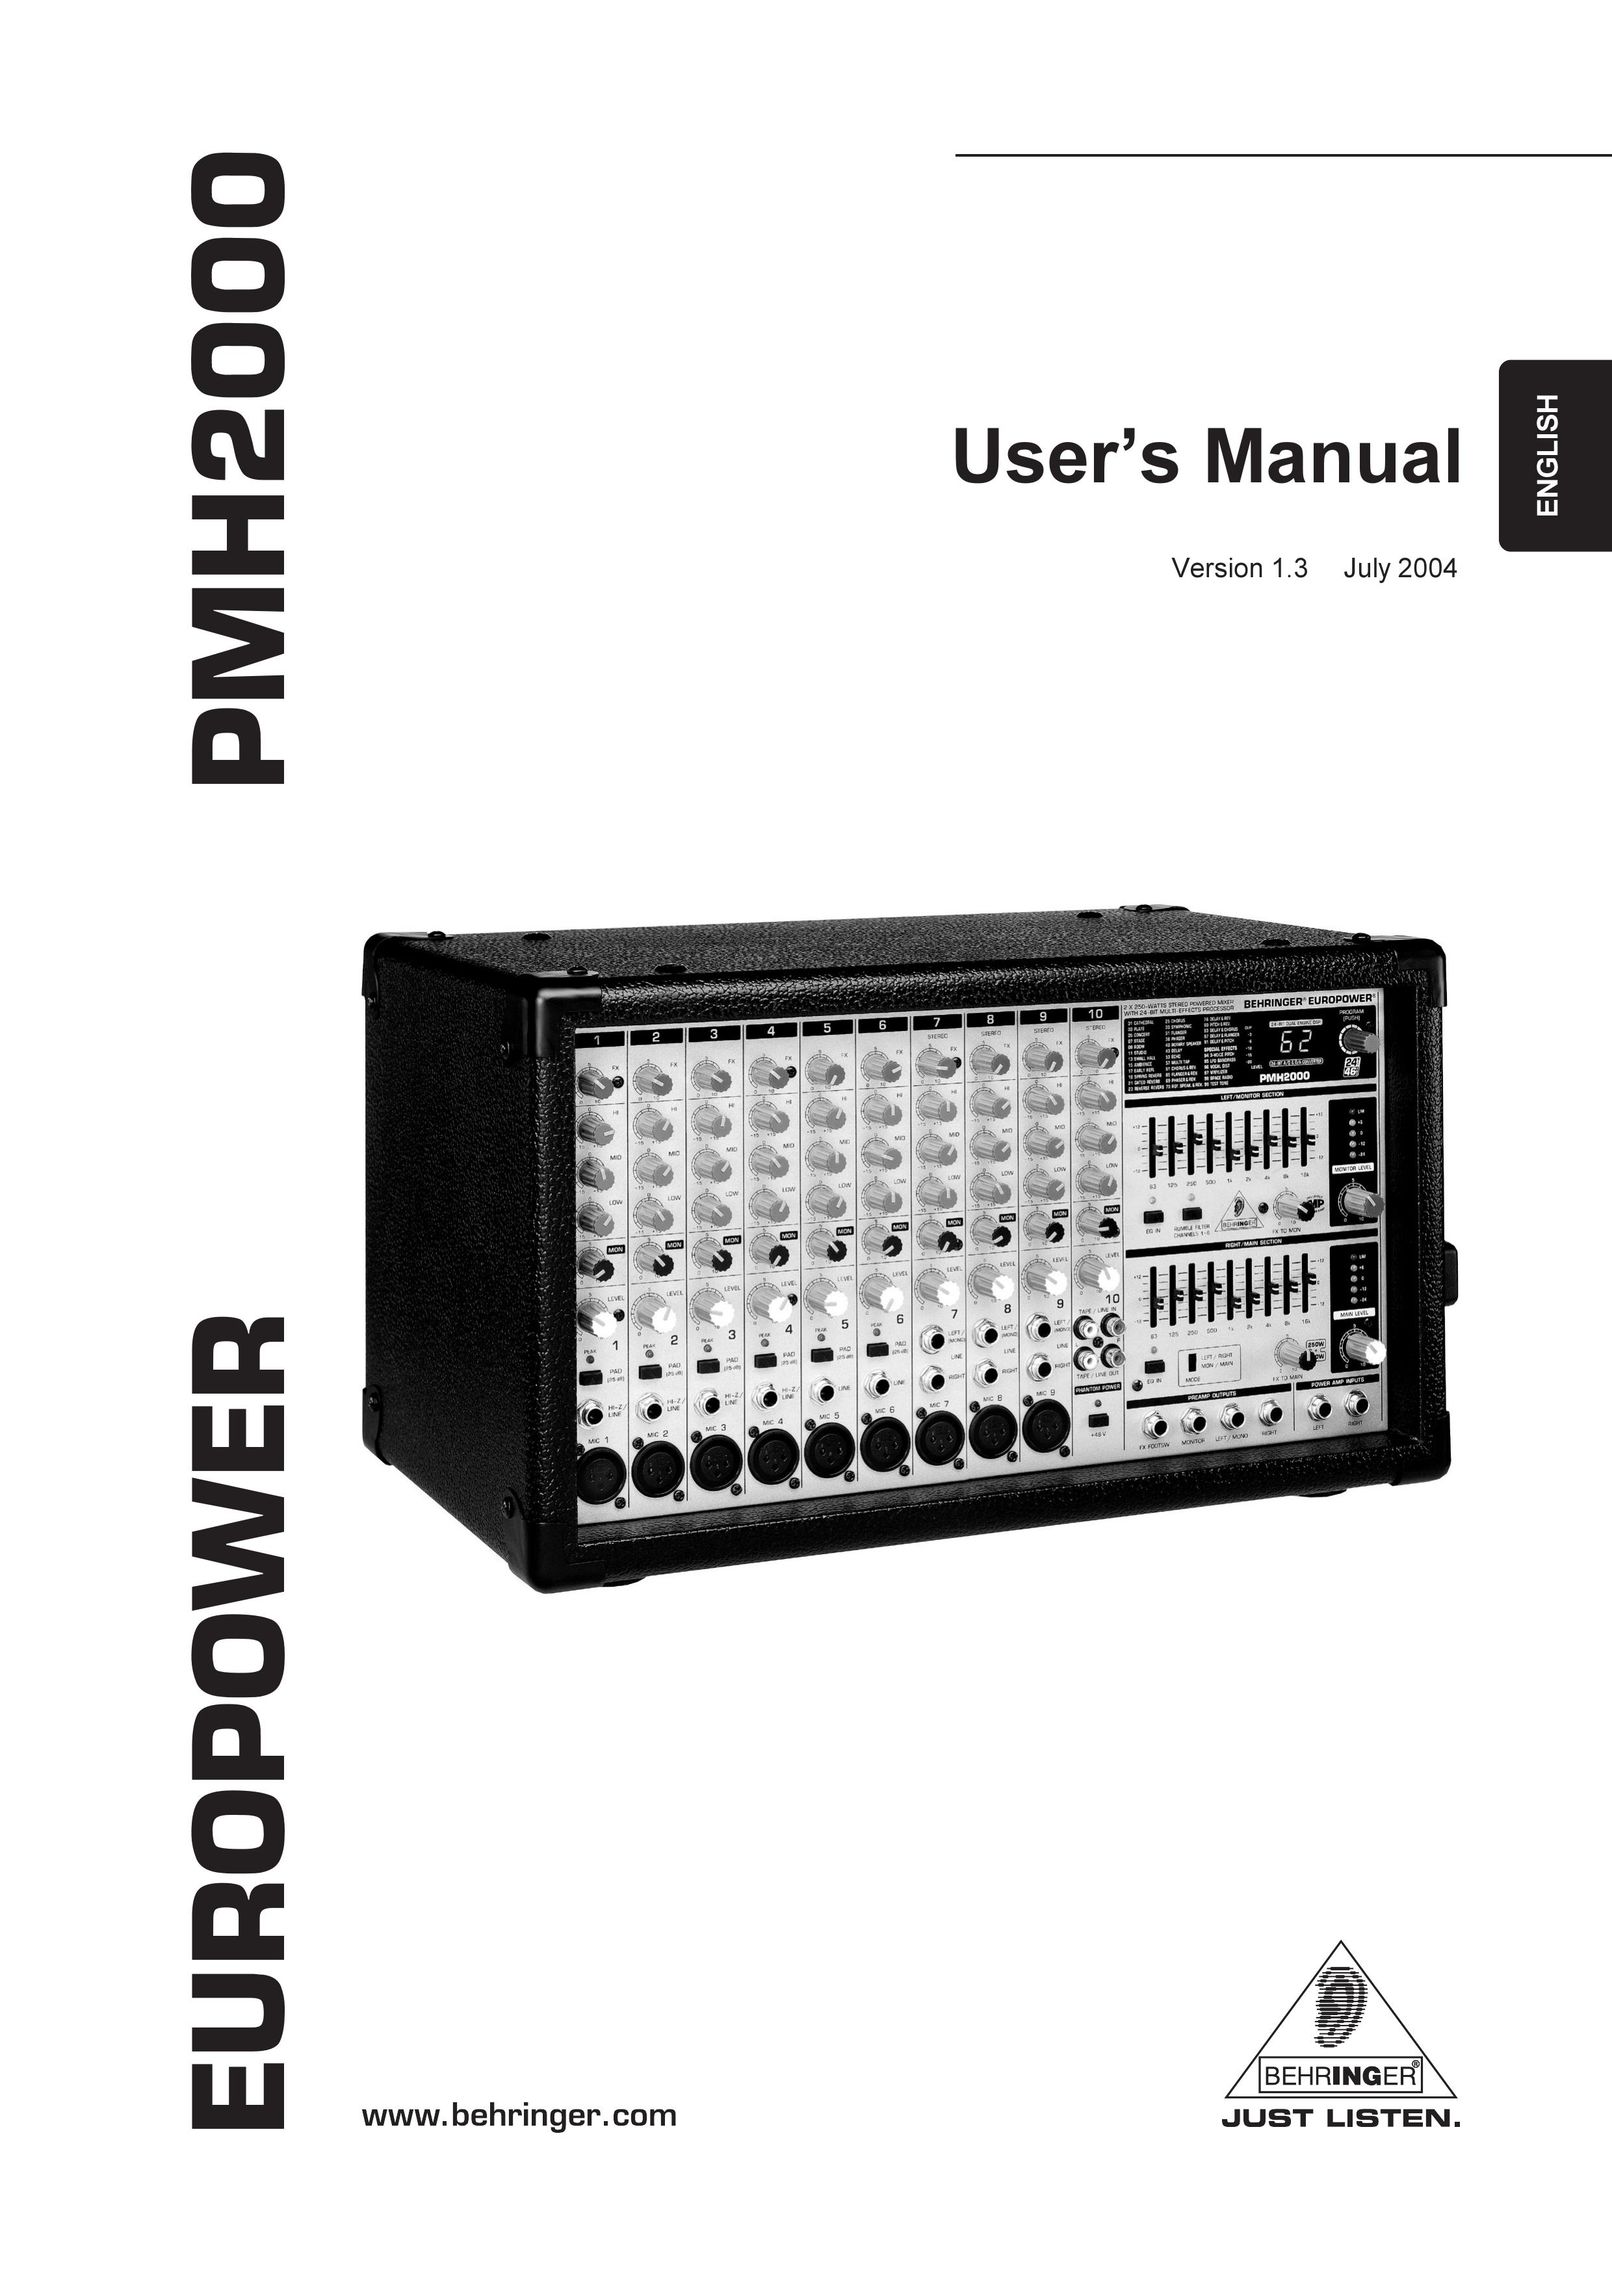 Behringer Power Mixer Power Supply User Manual